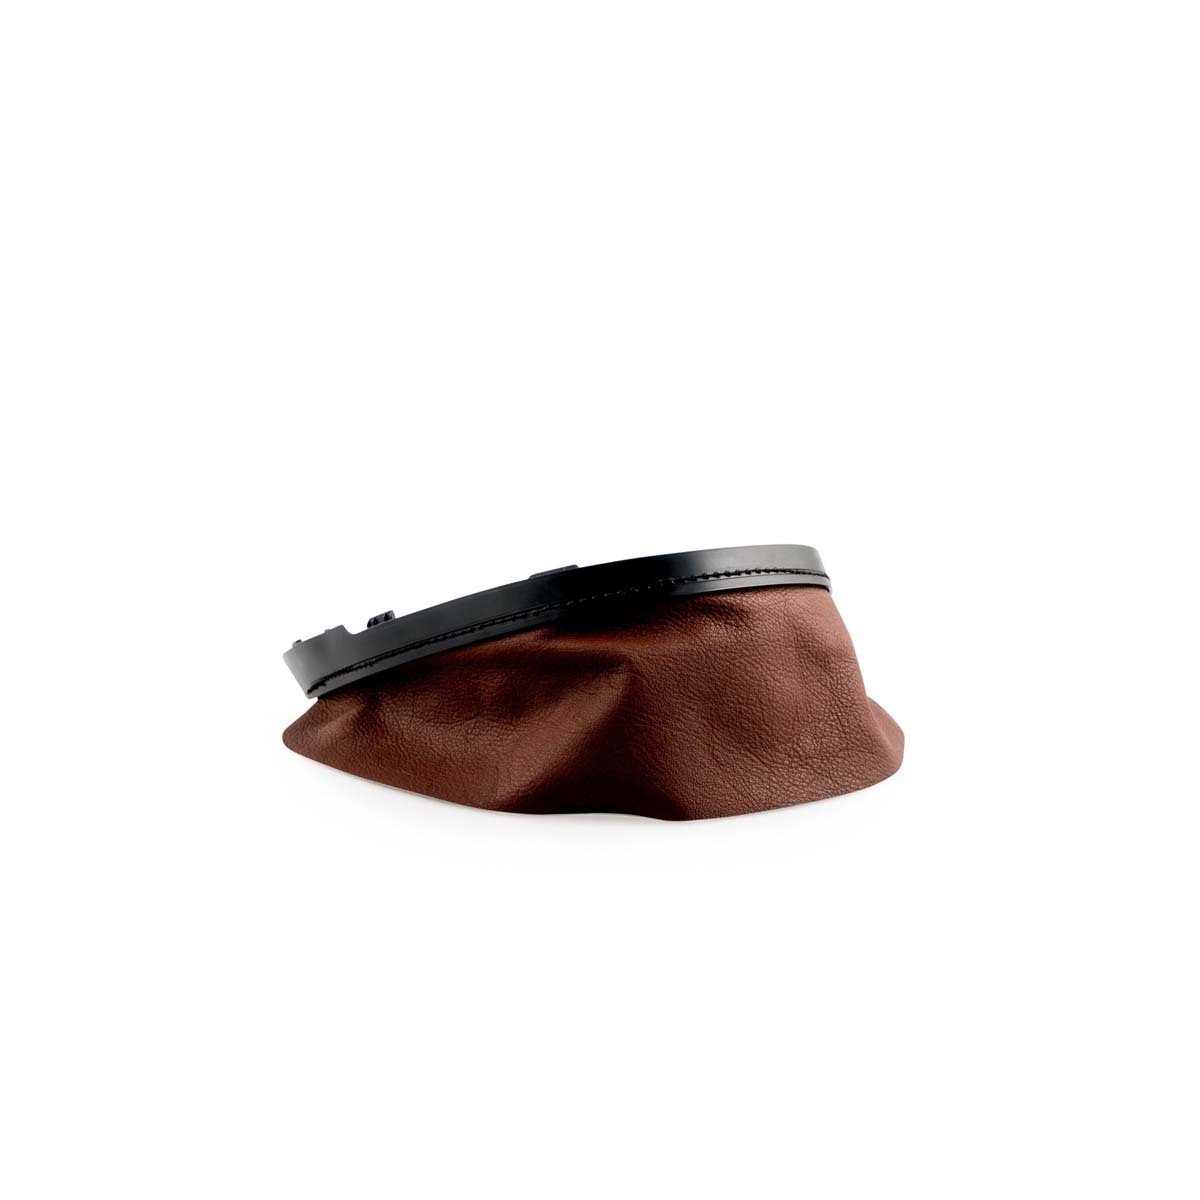 3M™ Speedglas™ Brown Leather Neck Cover (For G5-01 Welding Helmet)